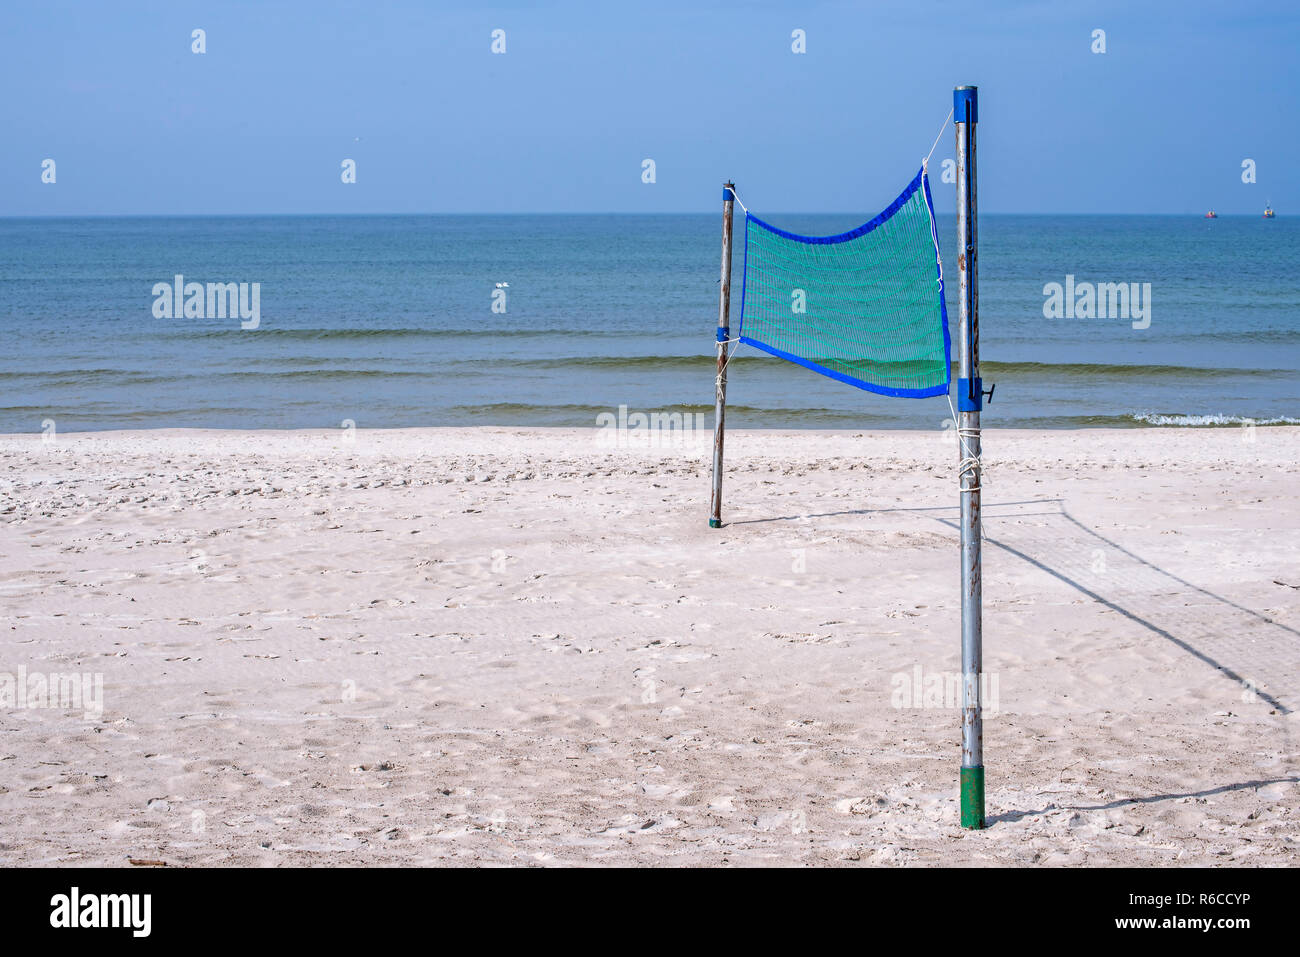 Beach-Volleyball Field At A Beach Stock Photo